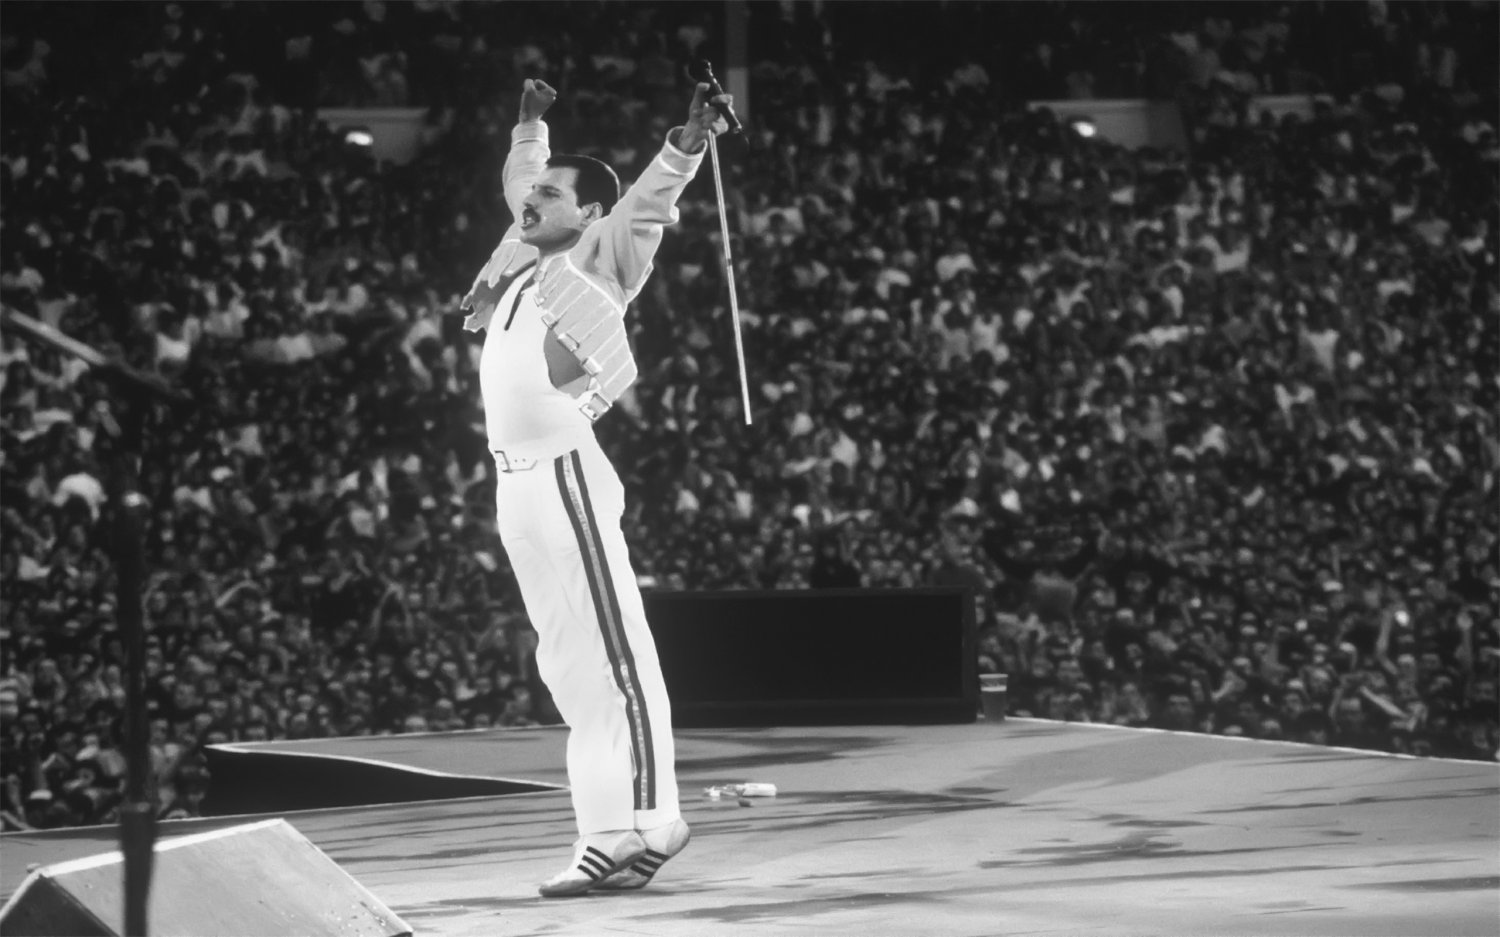 Freddie Mercury 18"x28" (45cm/70cm) Poster